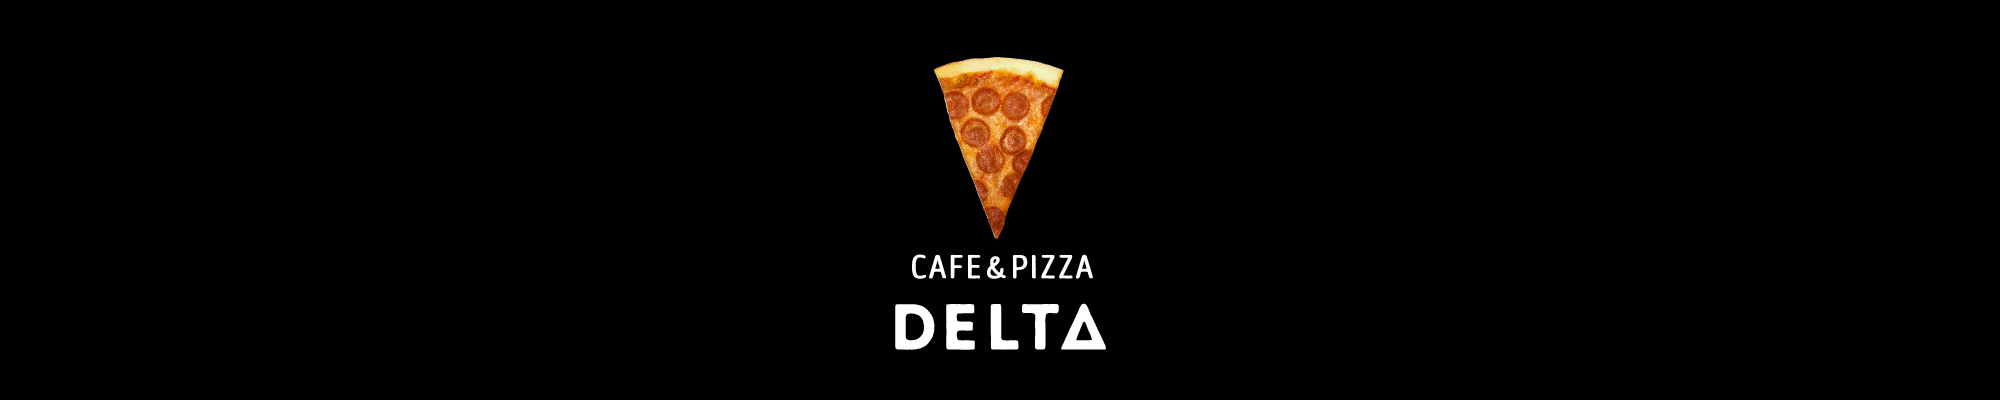 CAFE & PIZZA DELTA